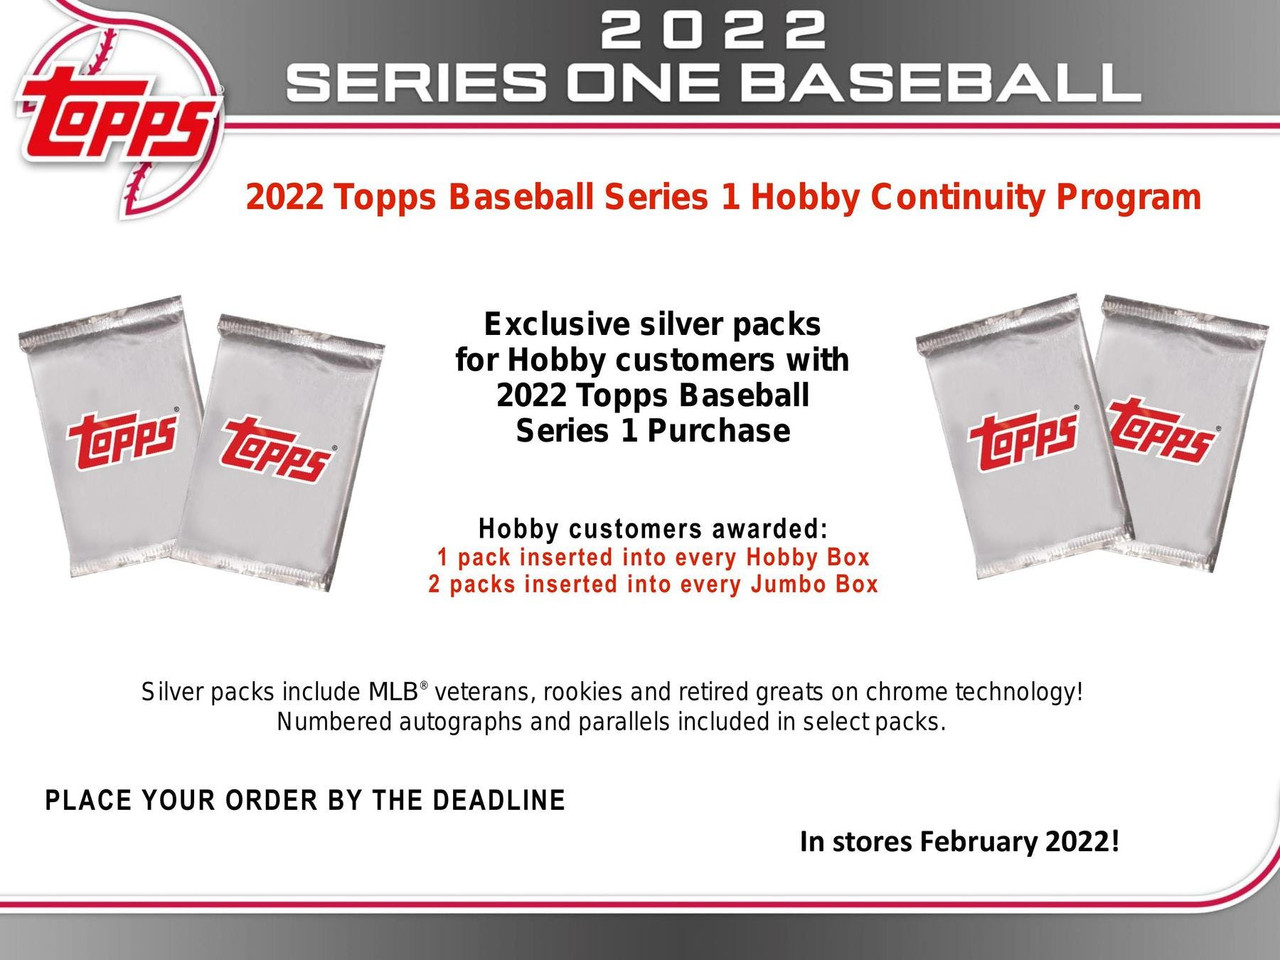 2022 Topps Series 1 Baseball Jumbo Box